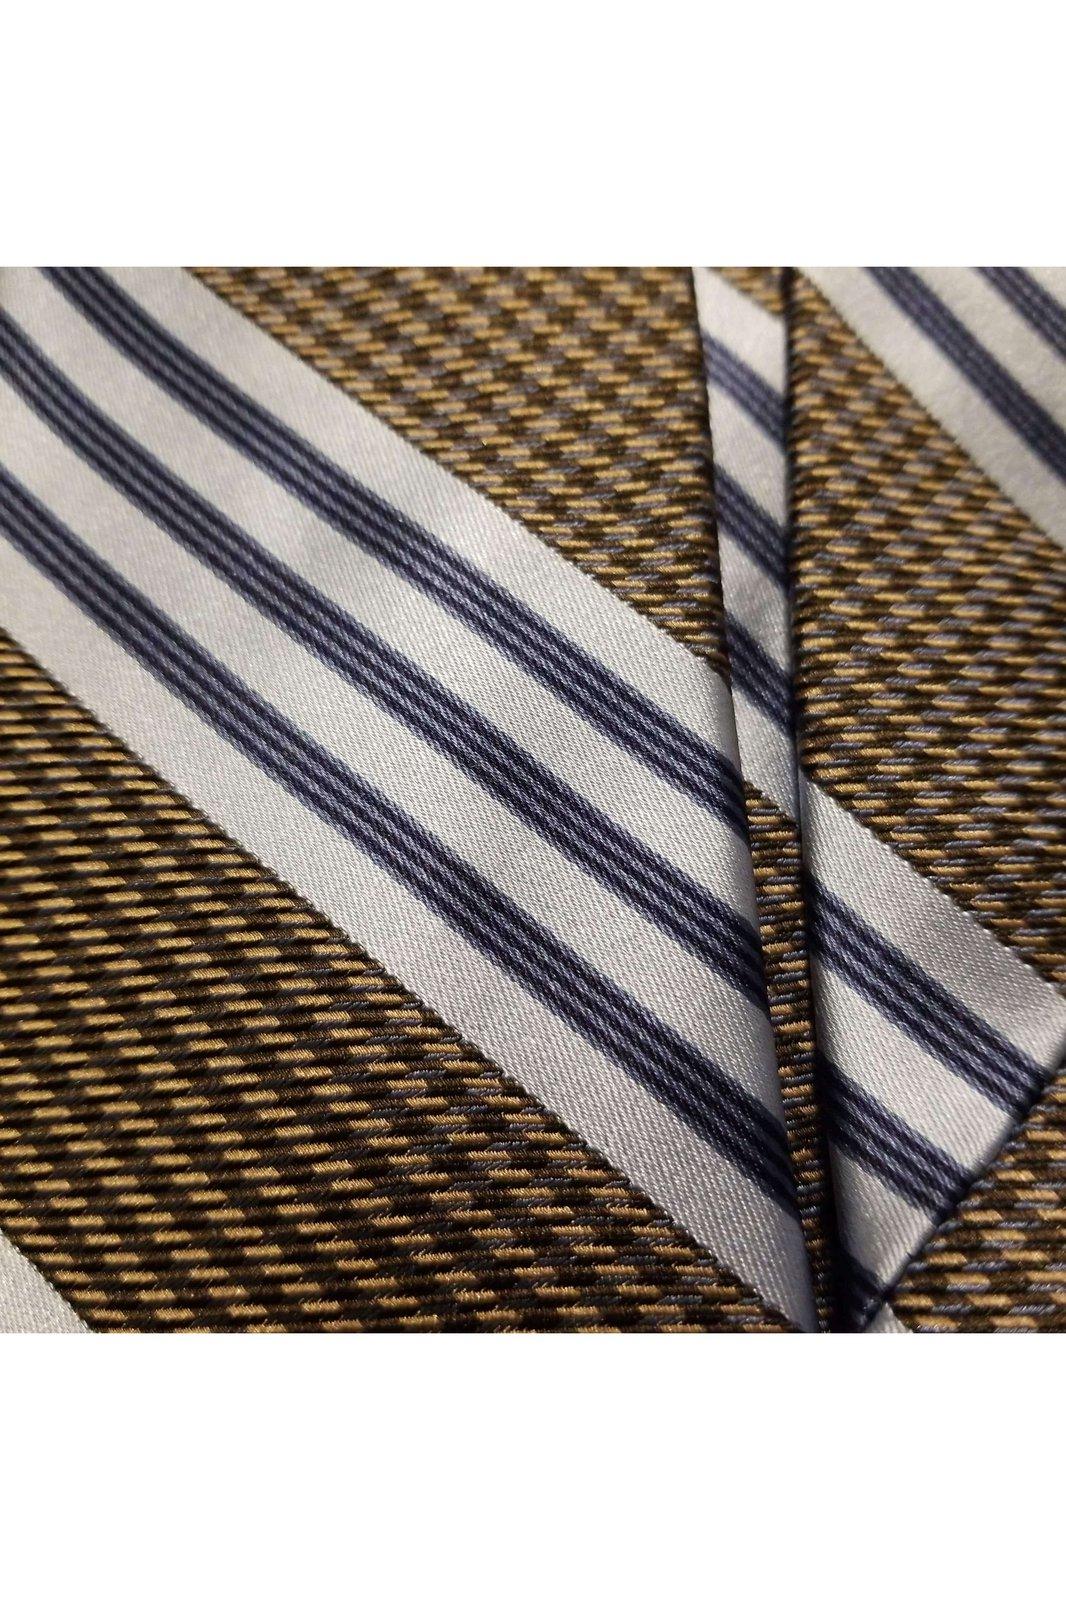 IKE BEHAR men's blue and brown stripe tie  